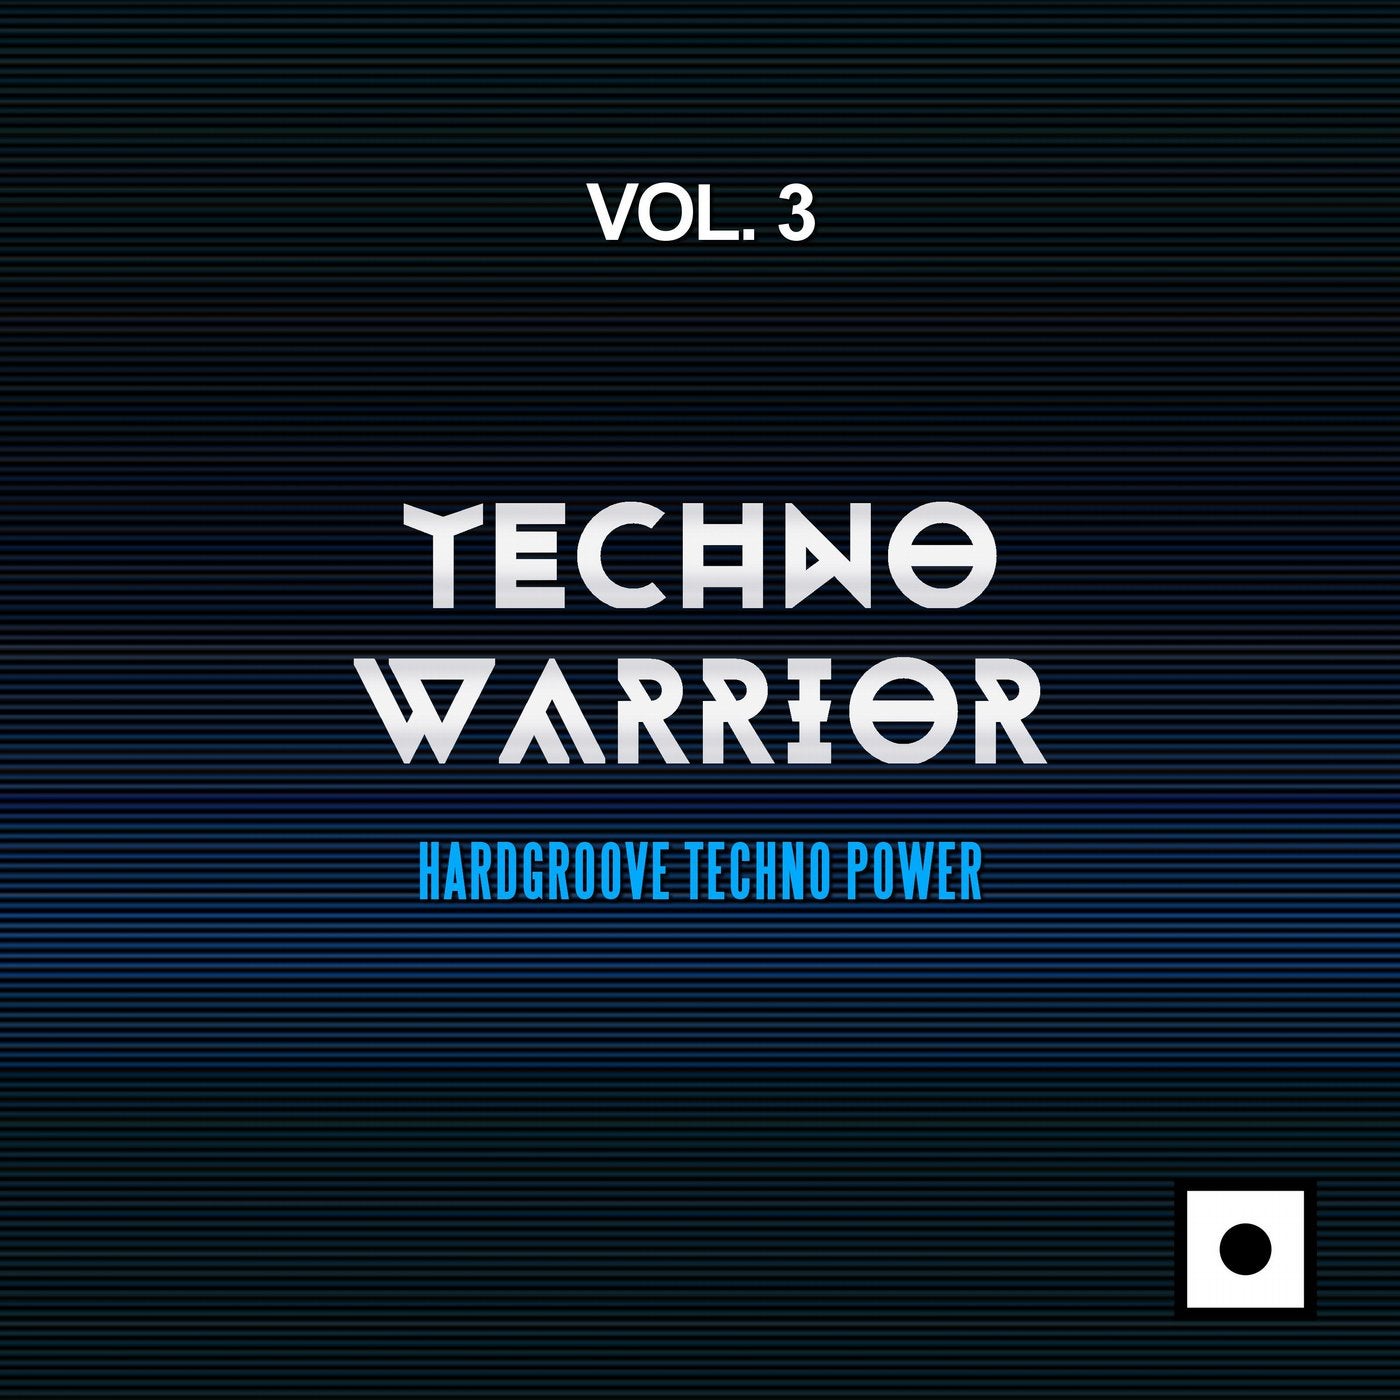 Techno Warrior, Vol. 3 (Hardgroove Techno Power)